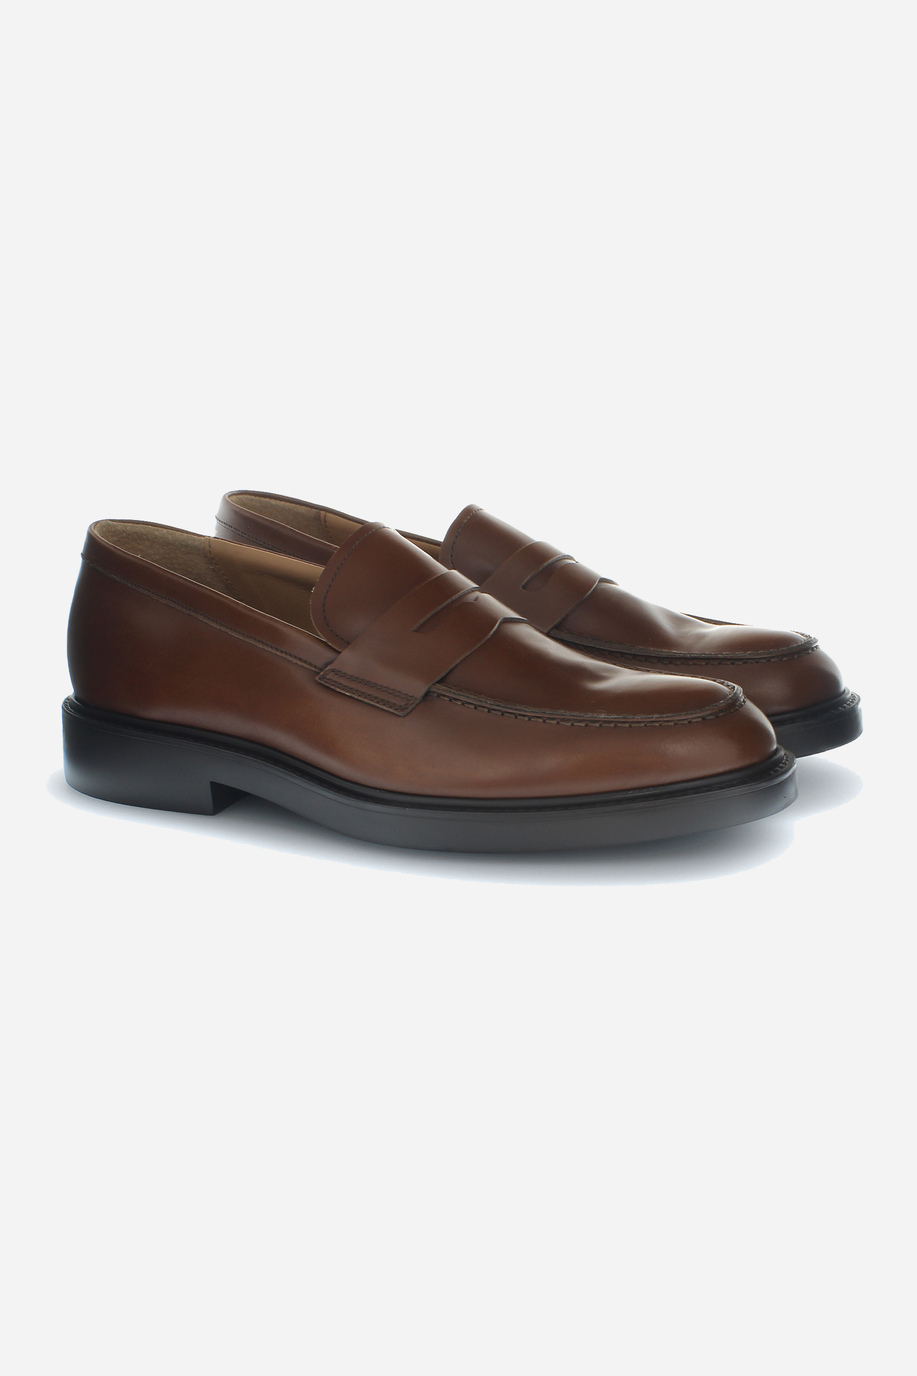 Leather moccasins - Formal Shoes | La Martina - Official Online Shop